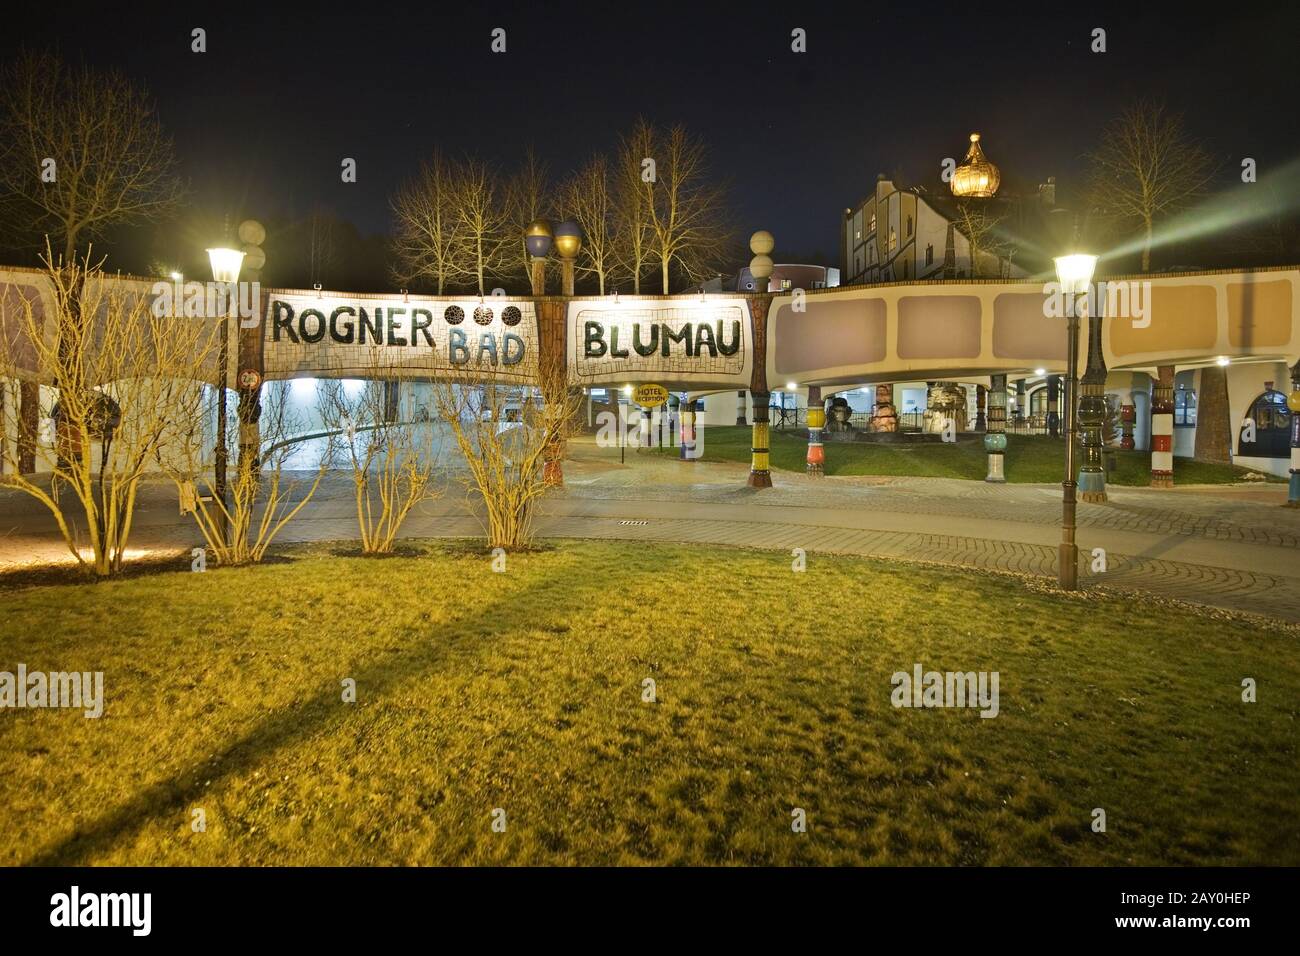 Rogner Bad Blumau, Burgenland, Austria - Rogner Bad Blumau, Burgenland, Austria Stock Photo